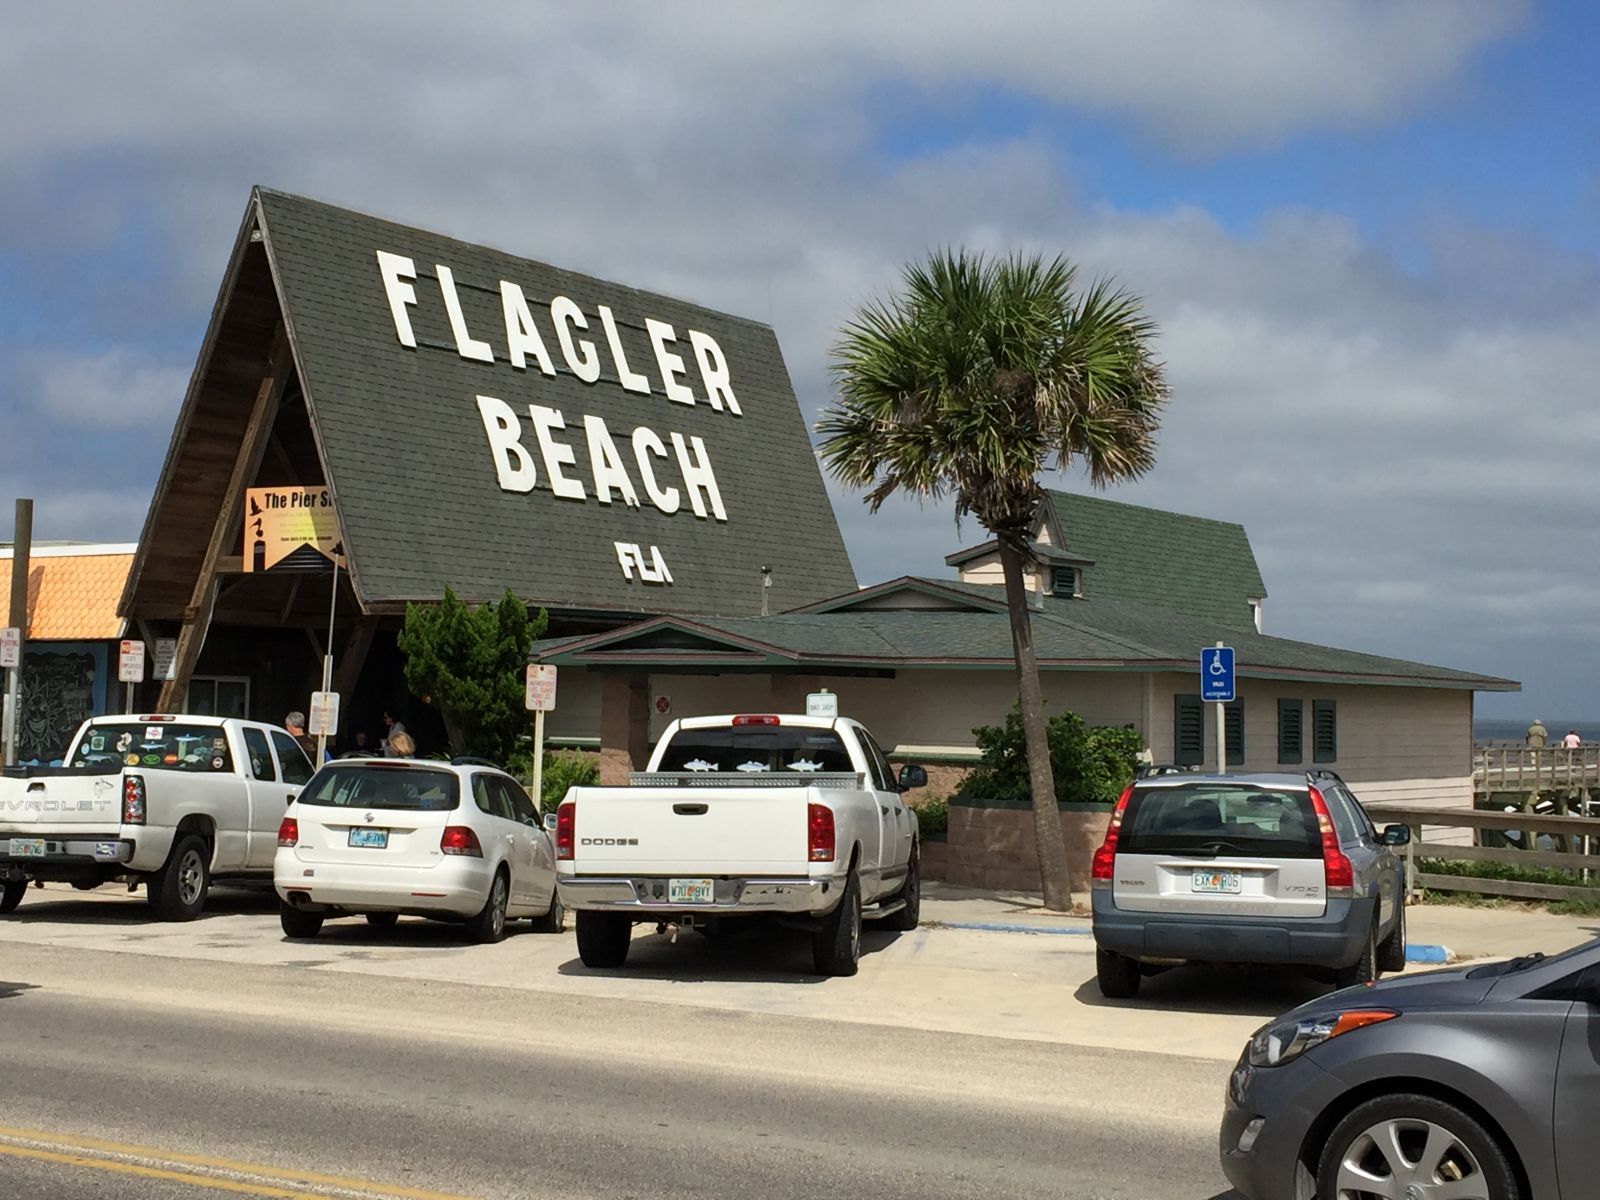 Flagler Beach